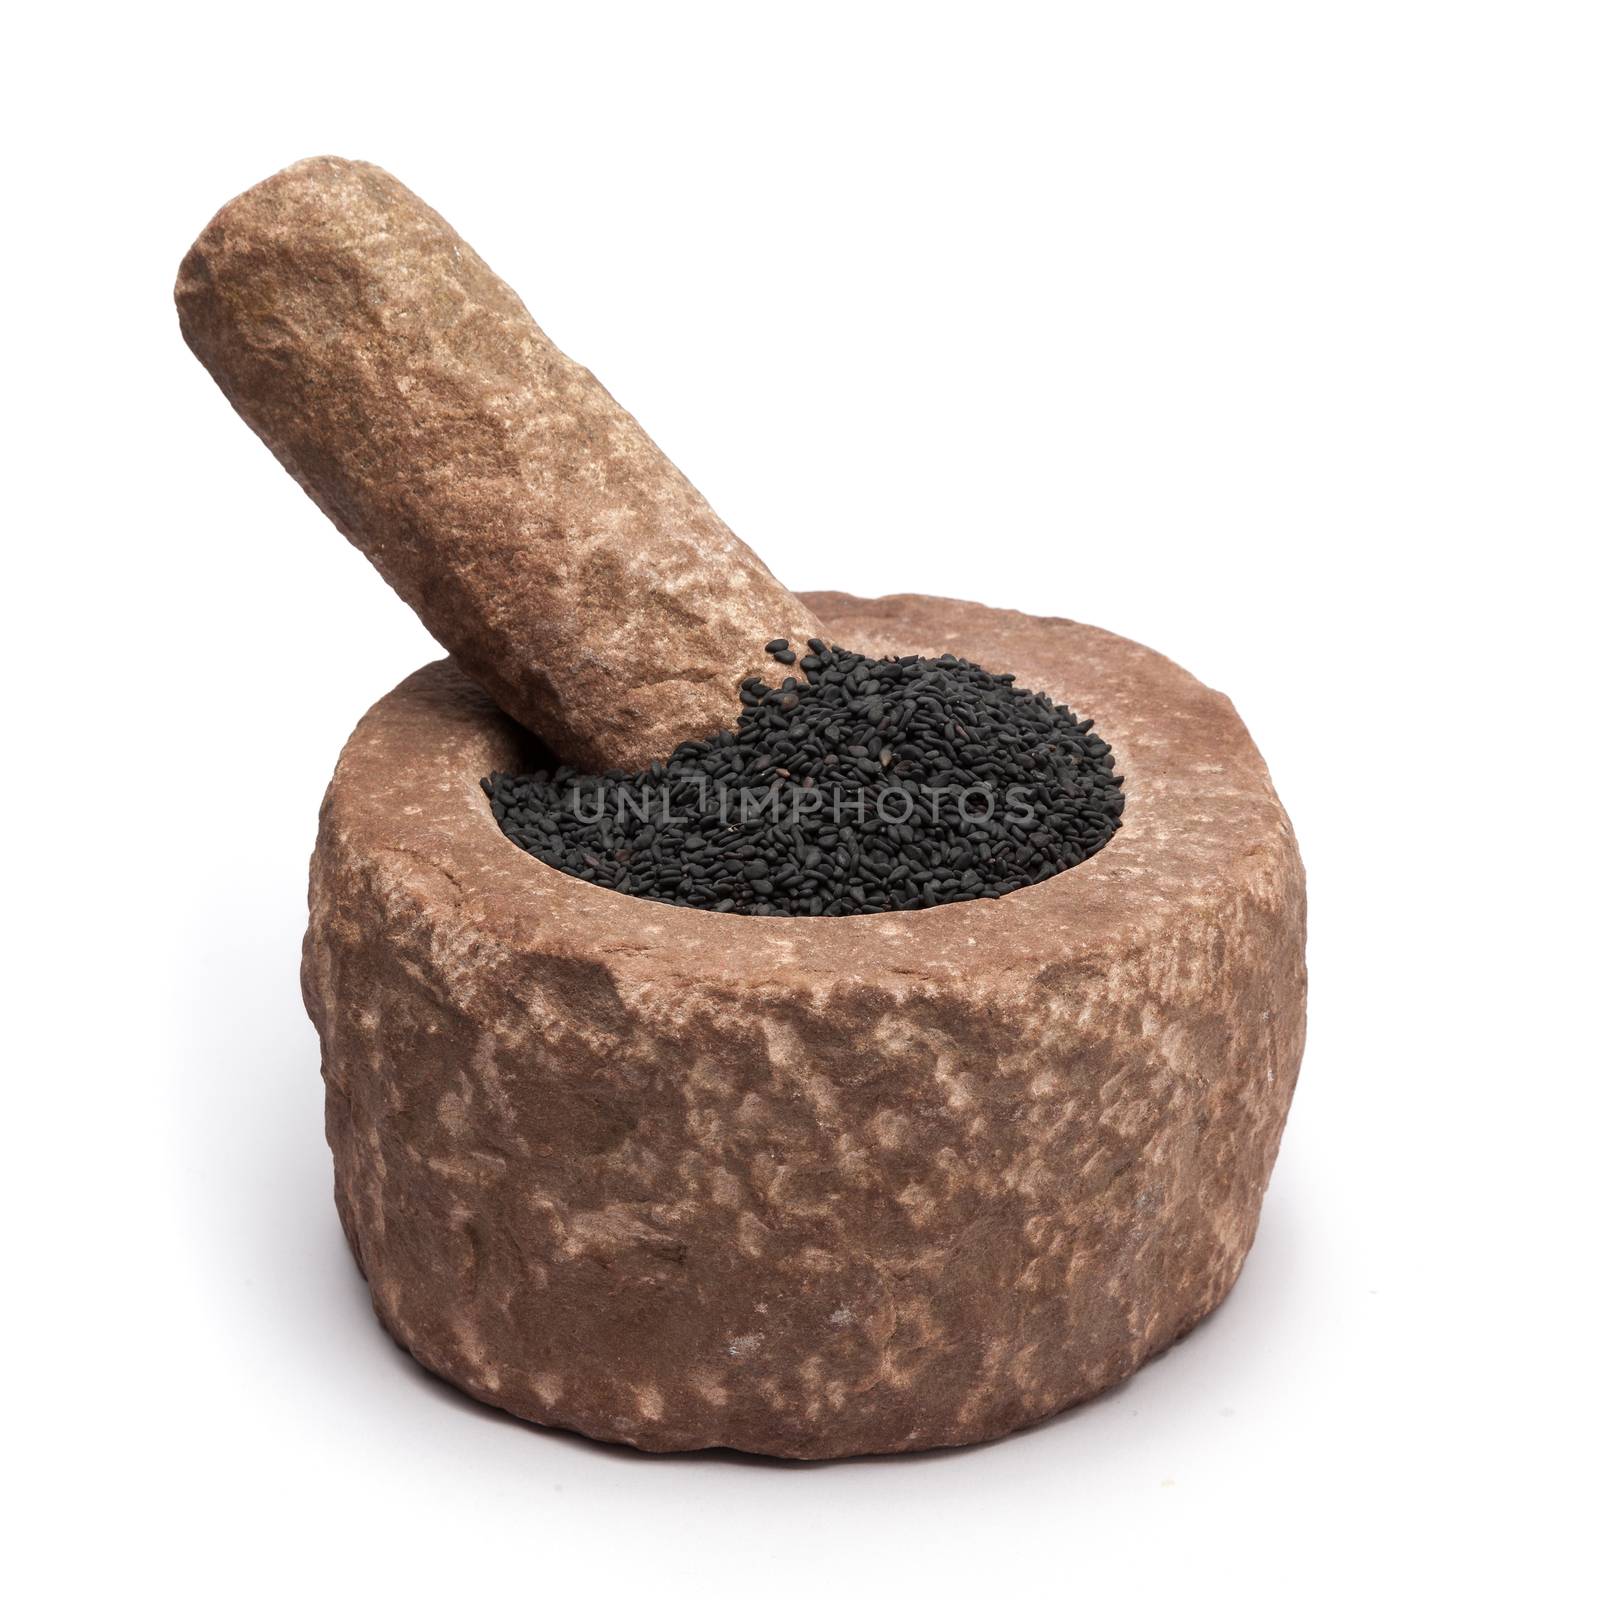 Organic Black Sesame (Sesamum indicum) in mortar with pestle, isolated on white background.